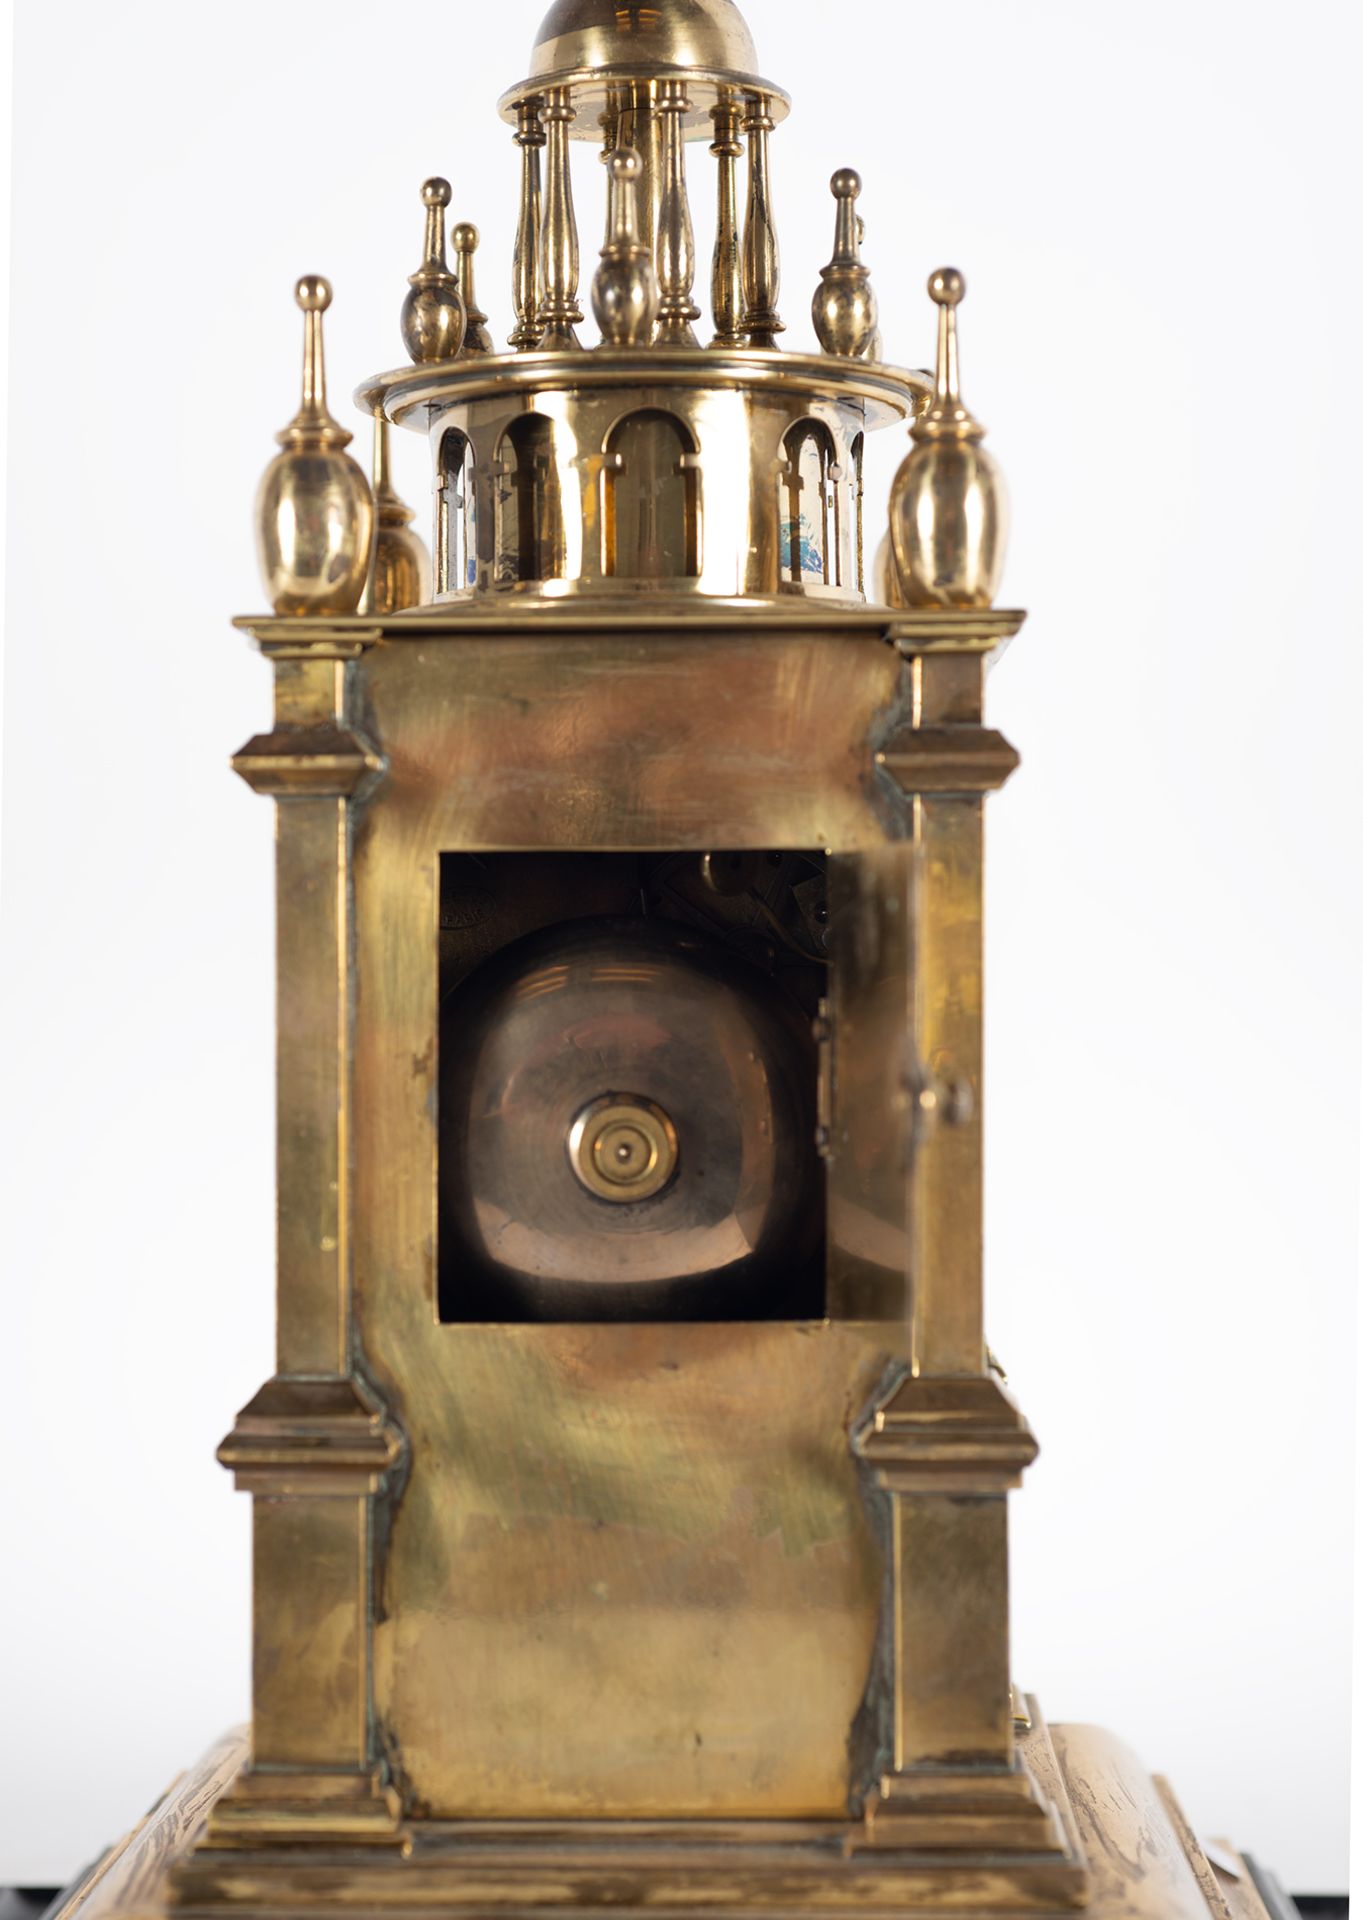 Nuremberg-type cathedral clock, 19th century - Image 5 of 5